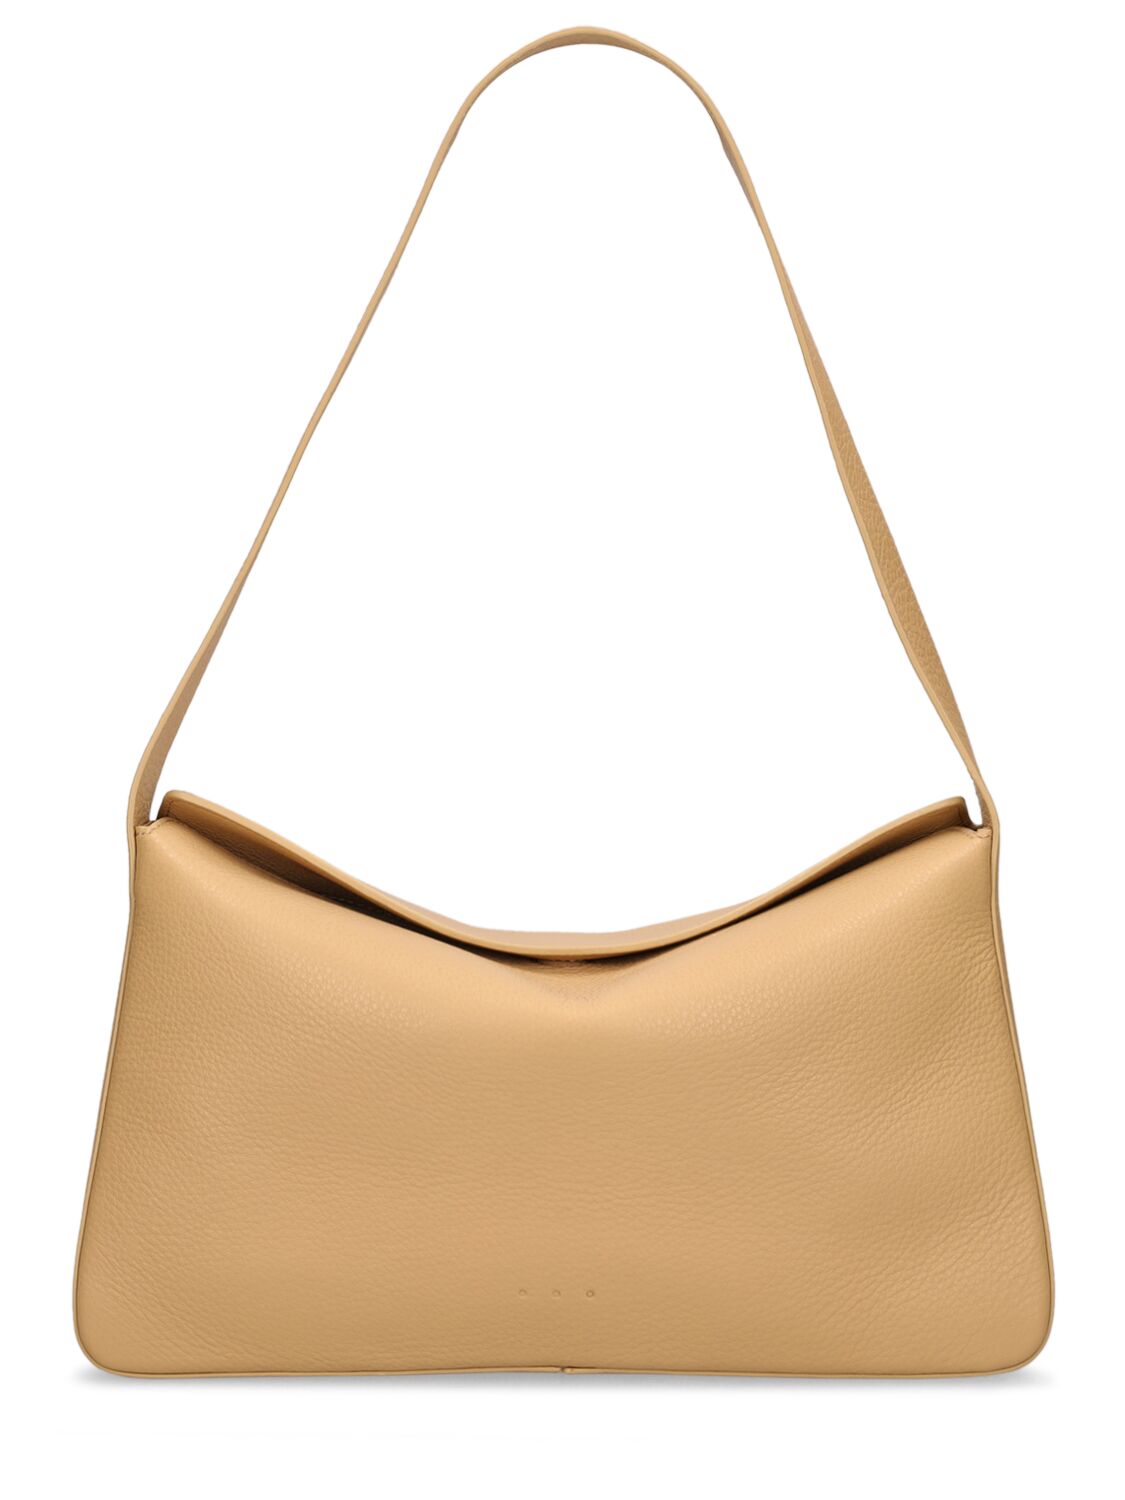 Image of Grained Smooth Leather Shoulder Bag